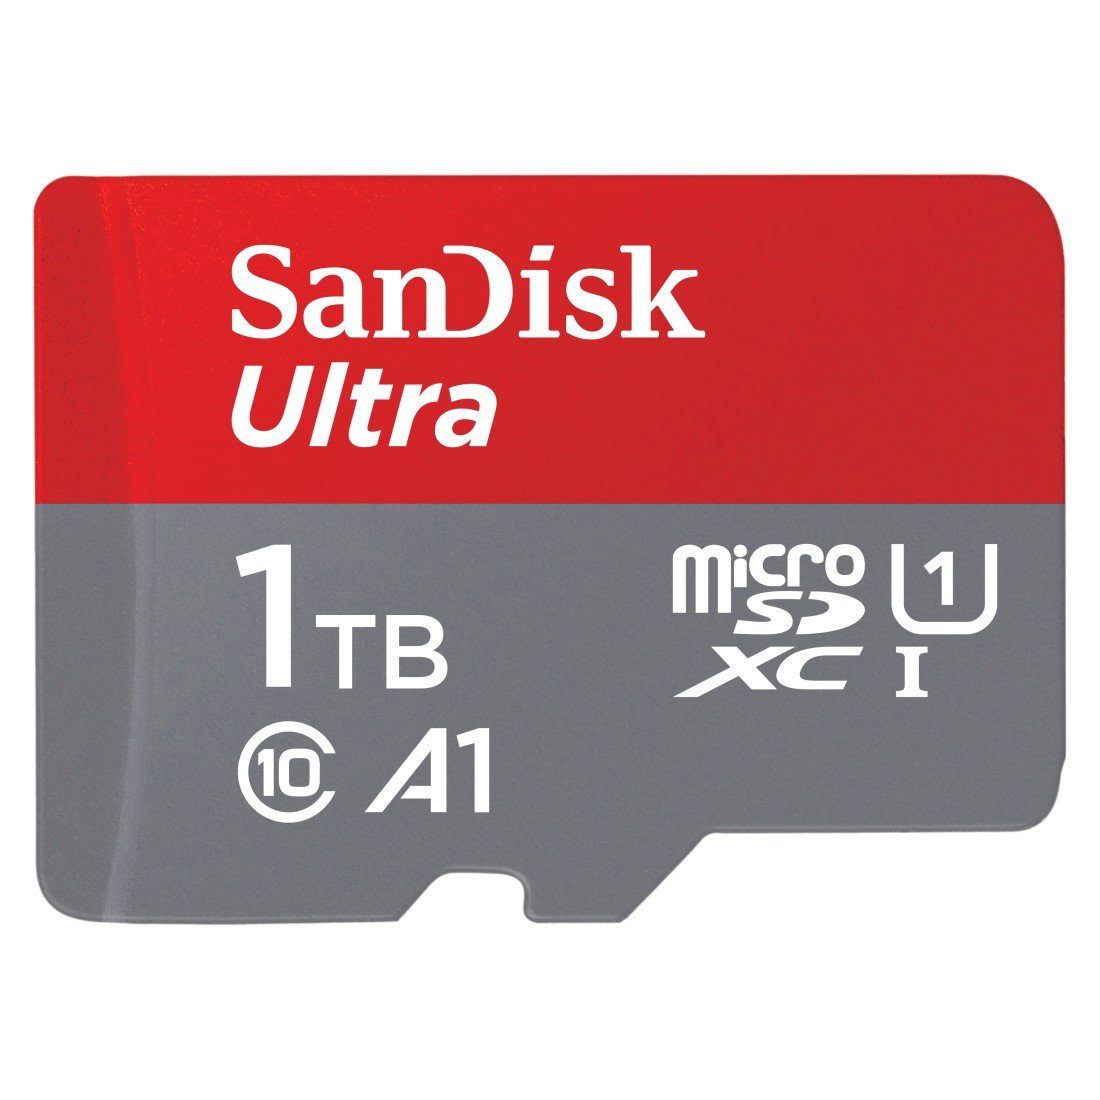 Sandisk Ultra (1 TB)